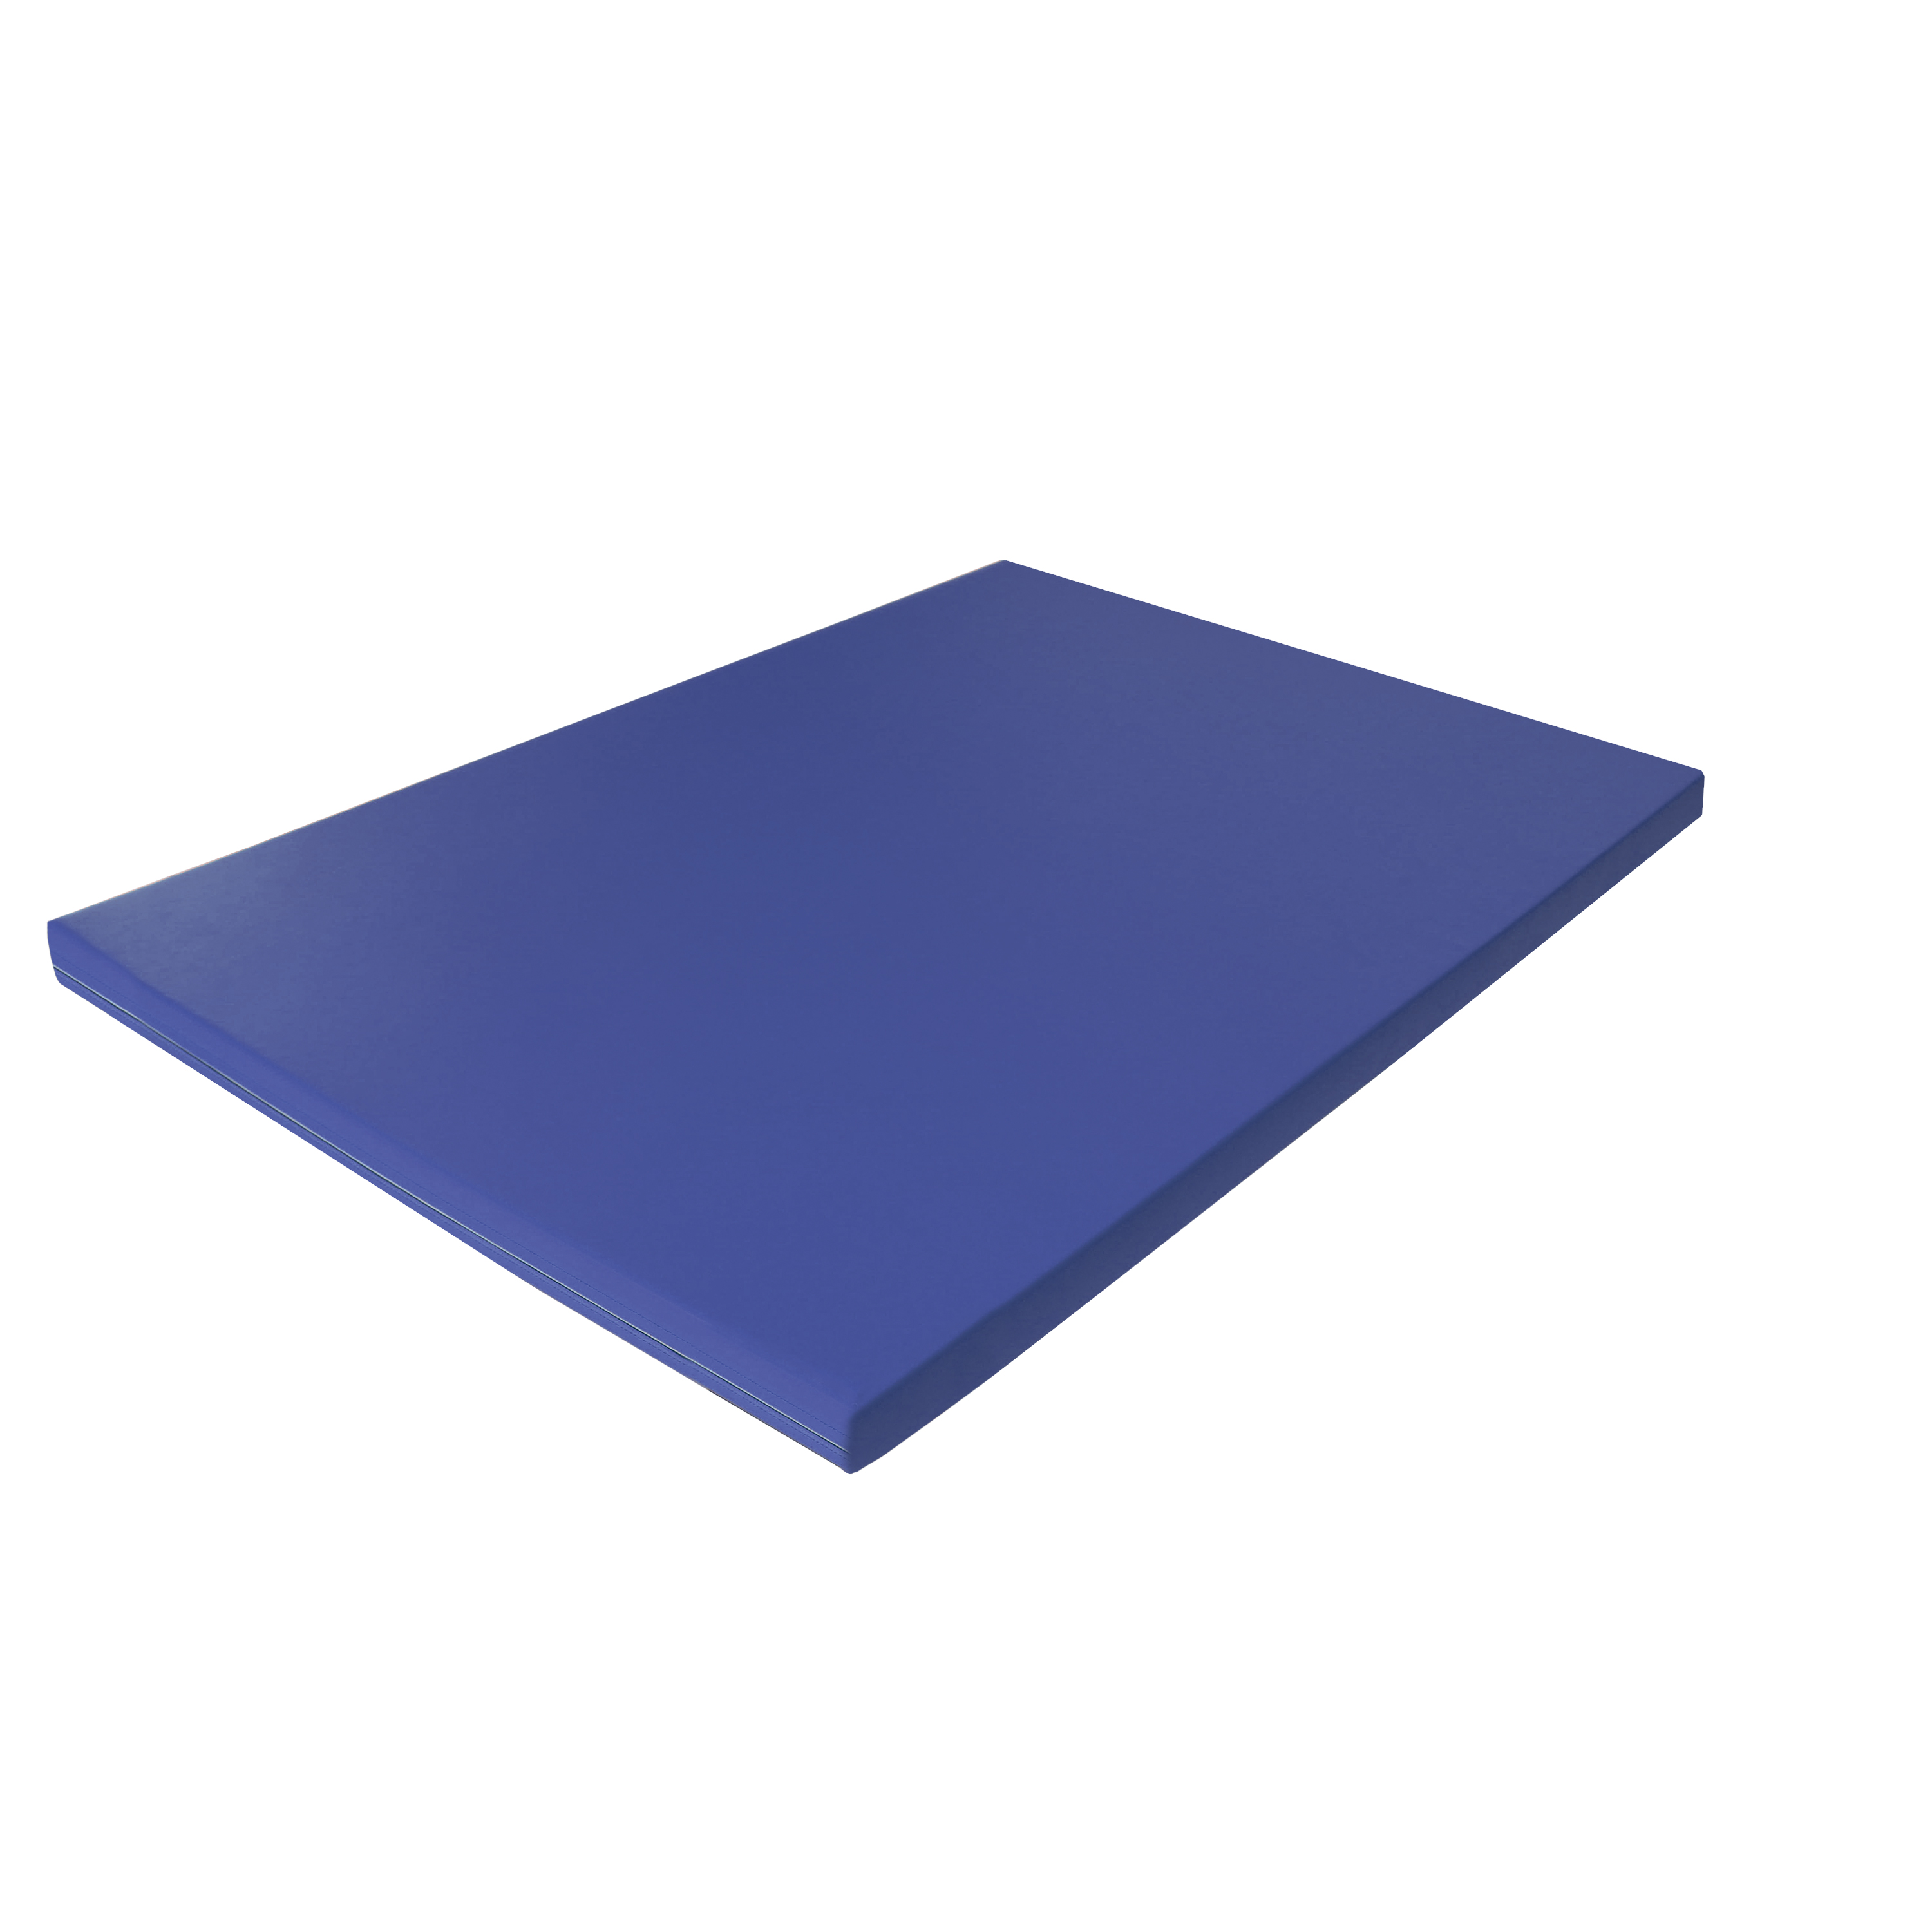 Fallschutzmatte 'FSM 160/60', 150 x 100 x 6 cm, blau